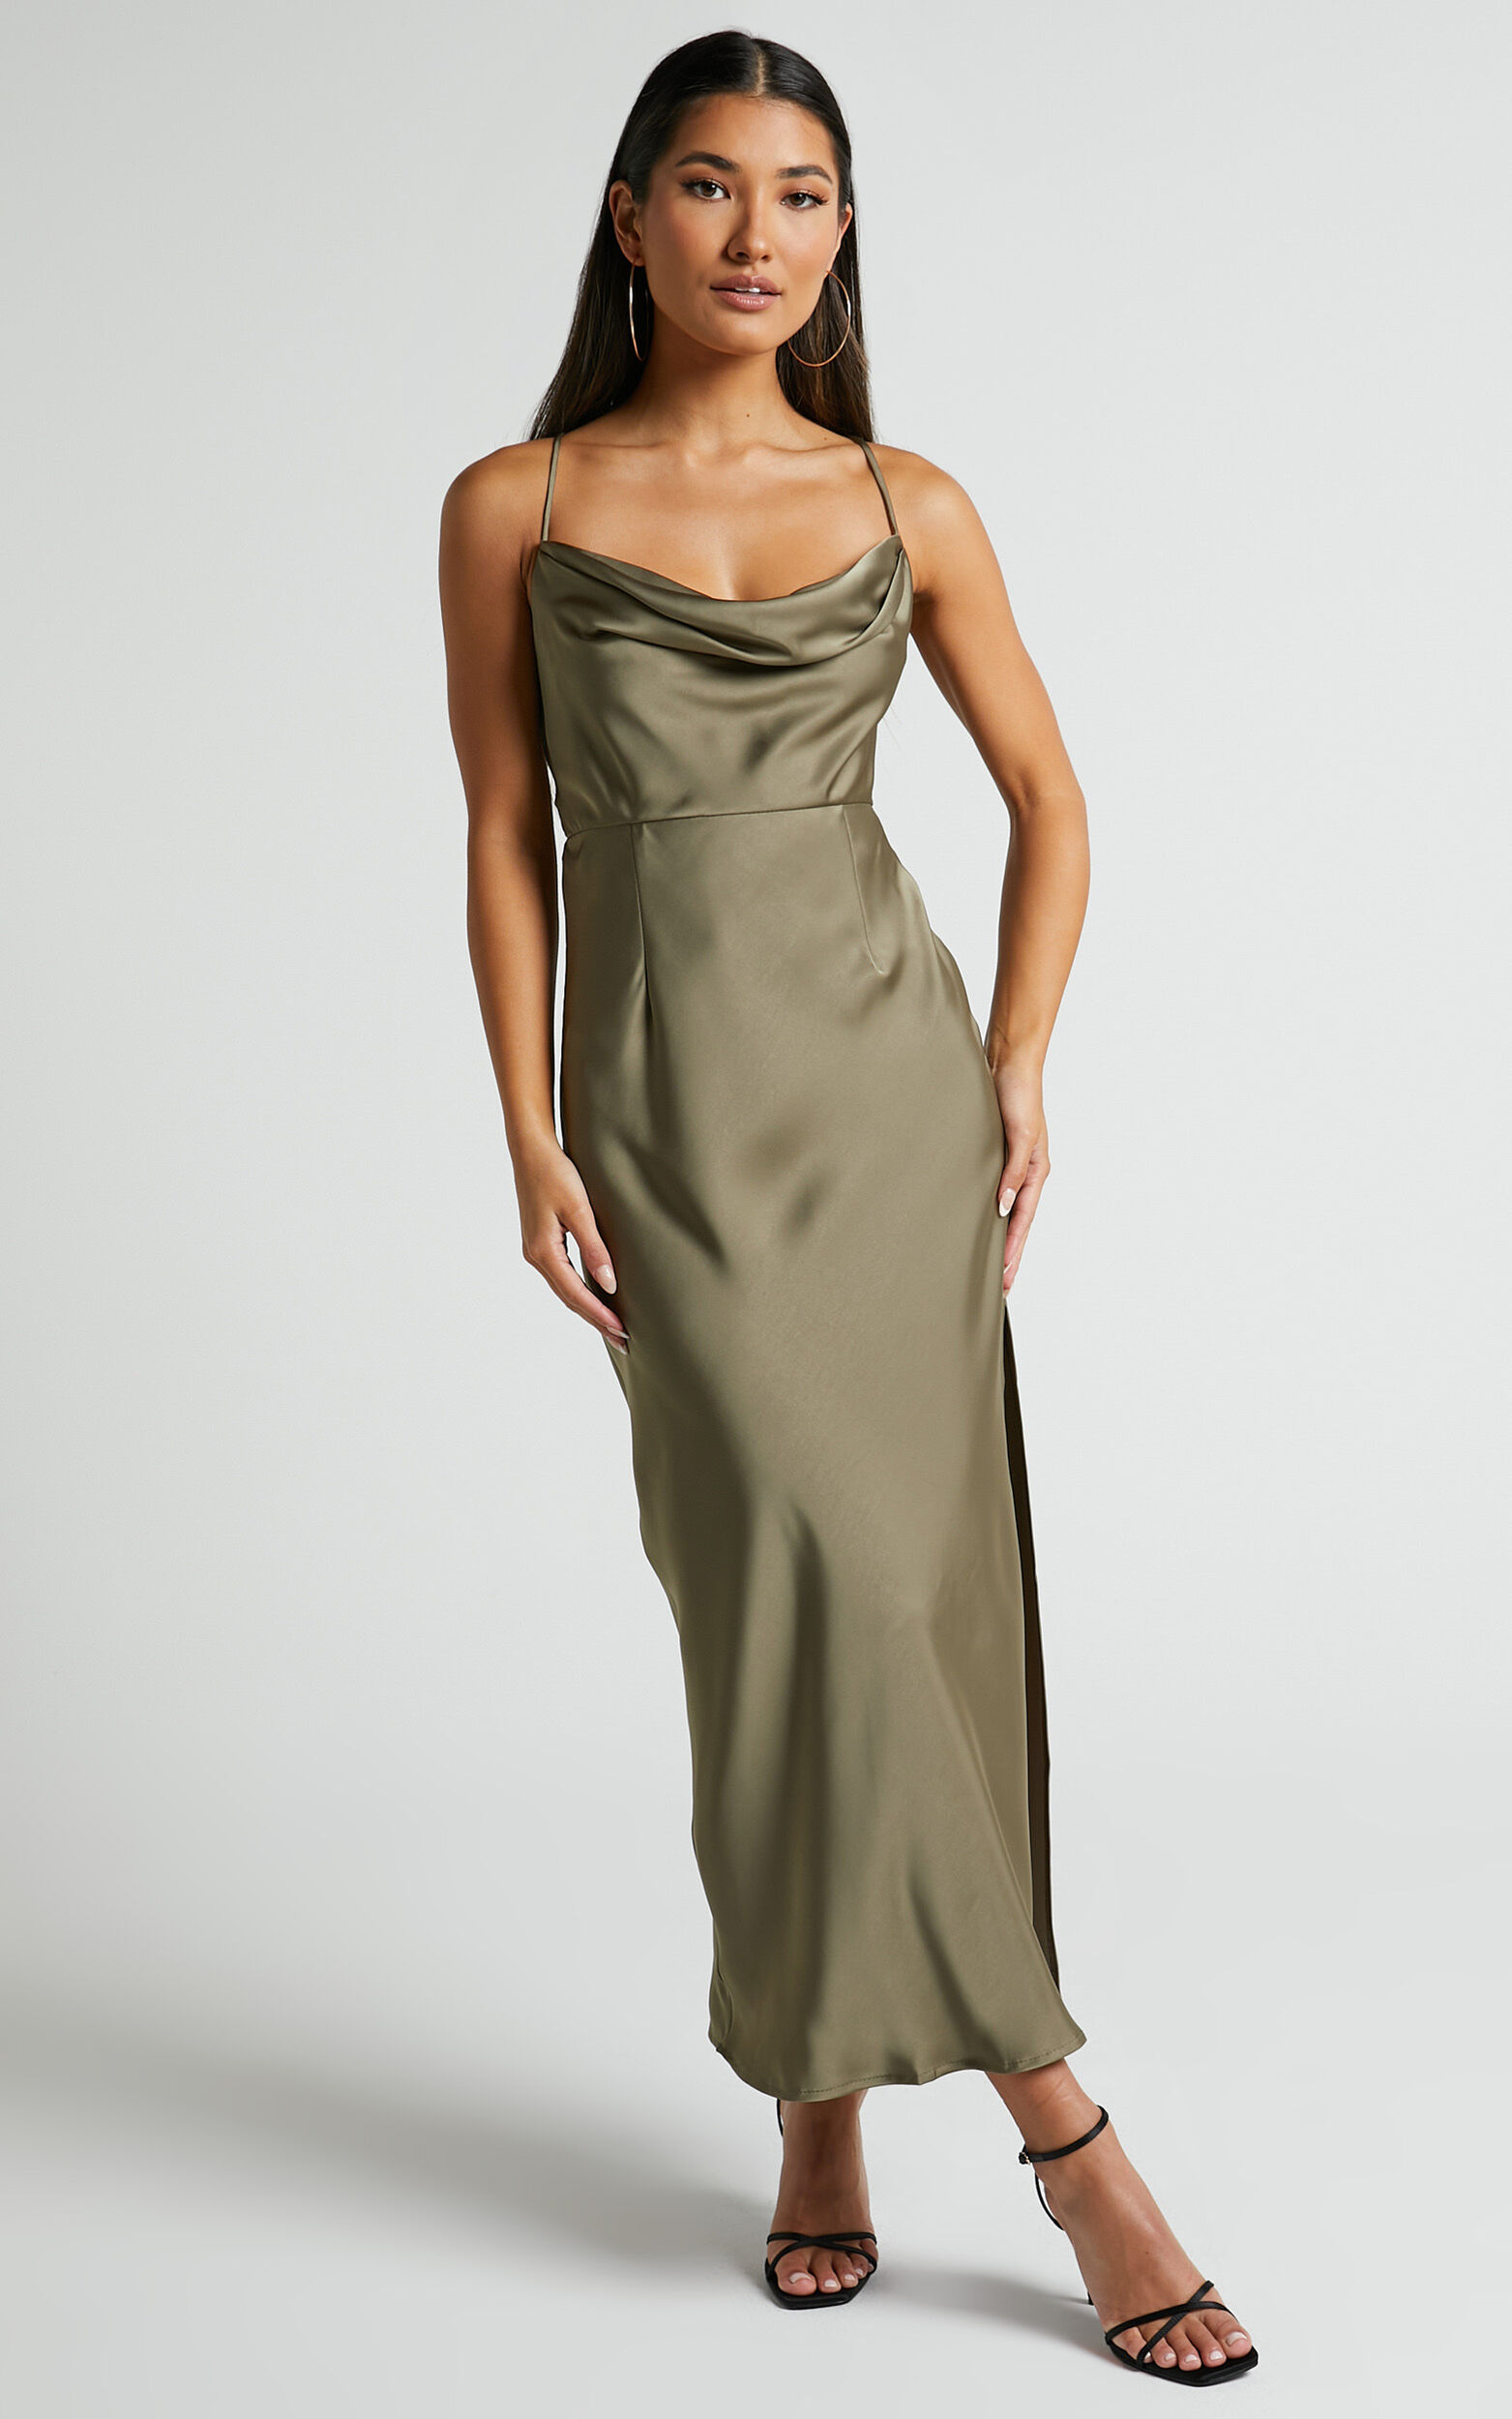 Olive Green Cowl Satin Dress – Summer Evenings